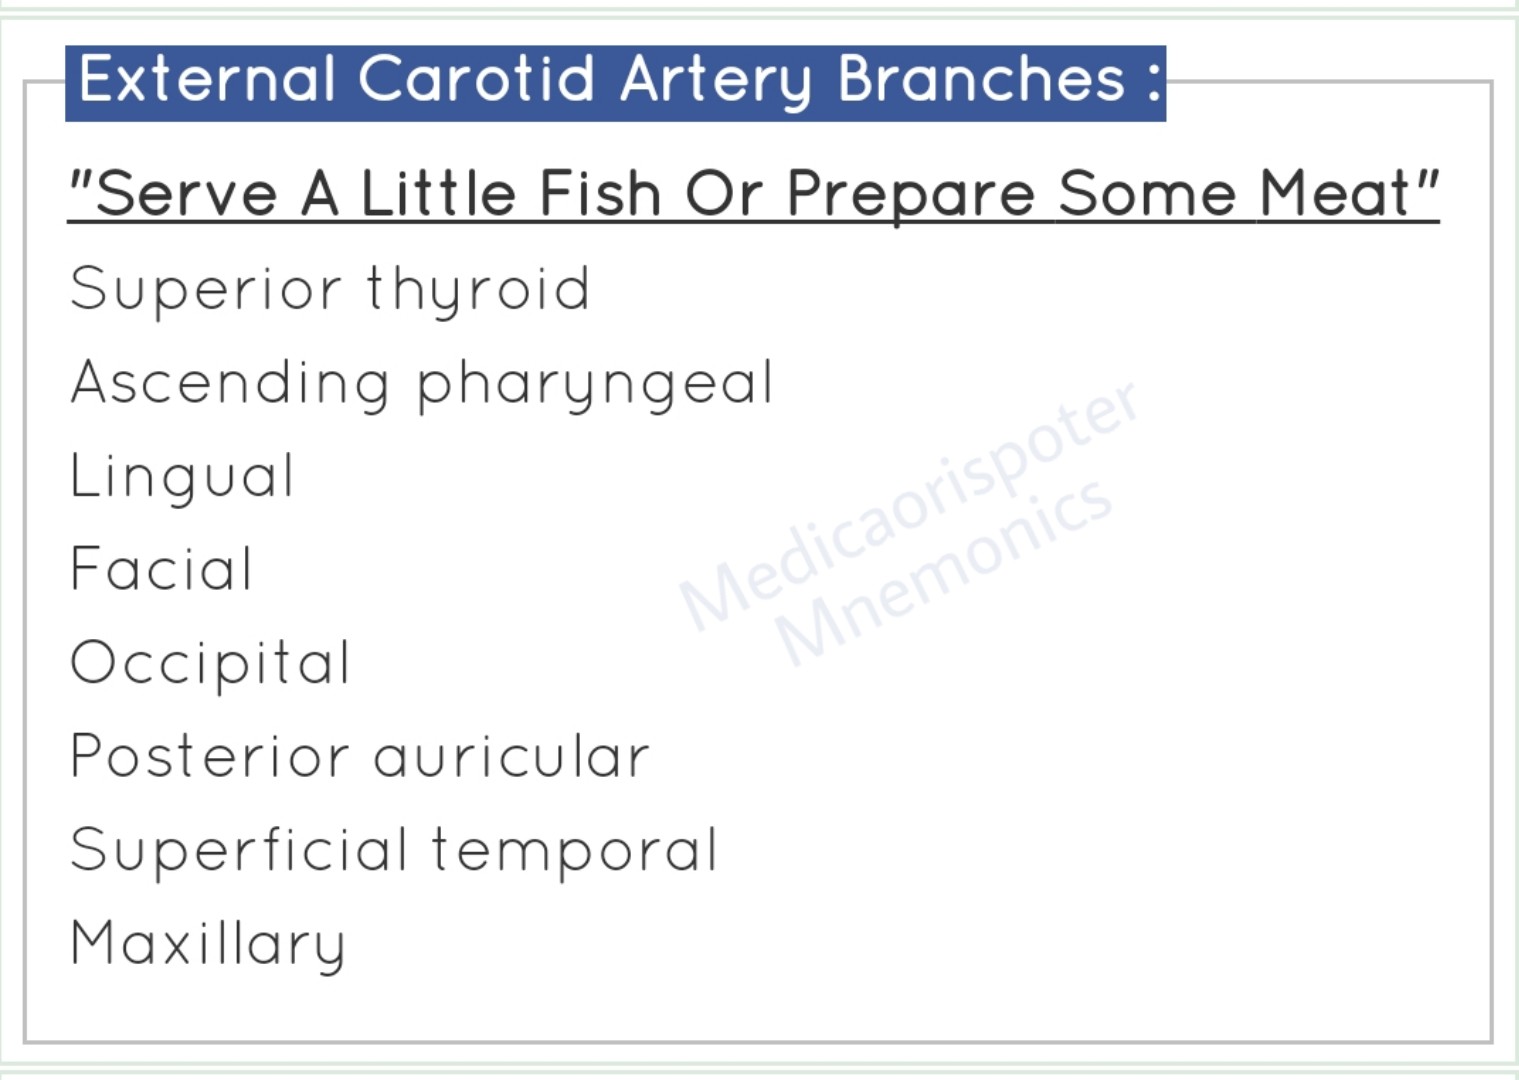 Branches_of_External_Carotid_Artery